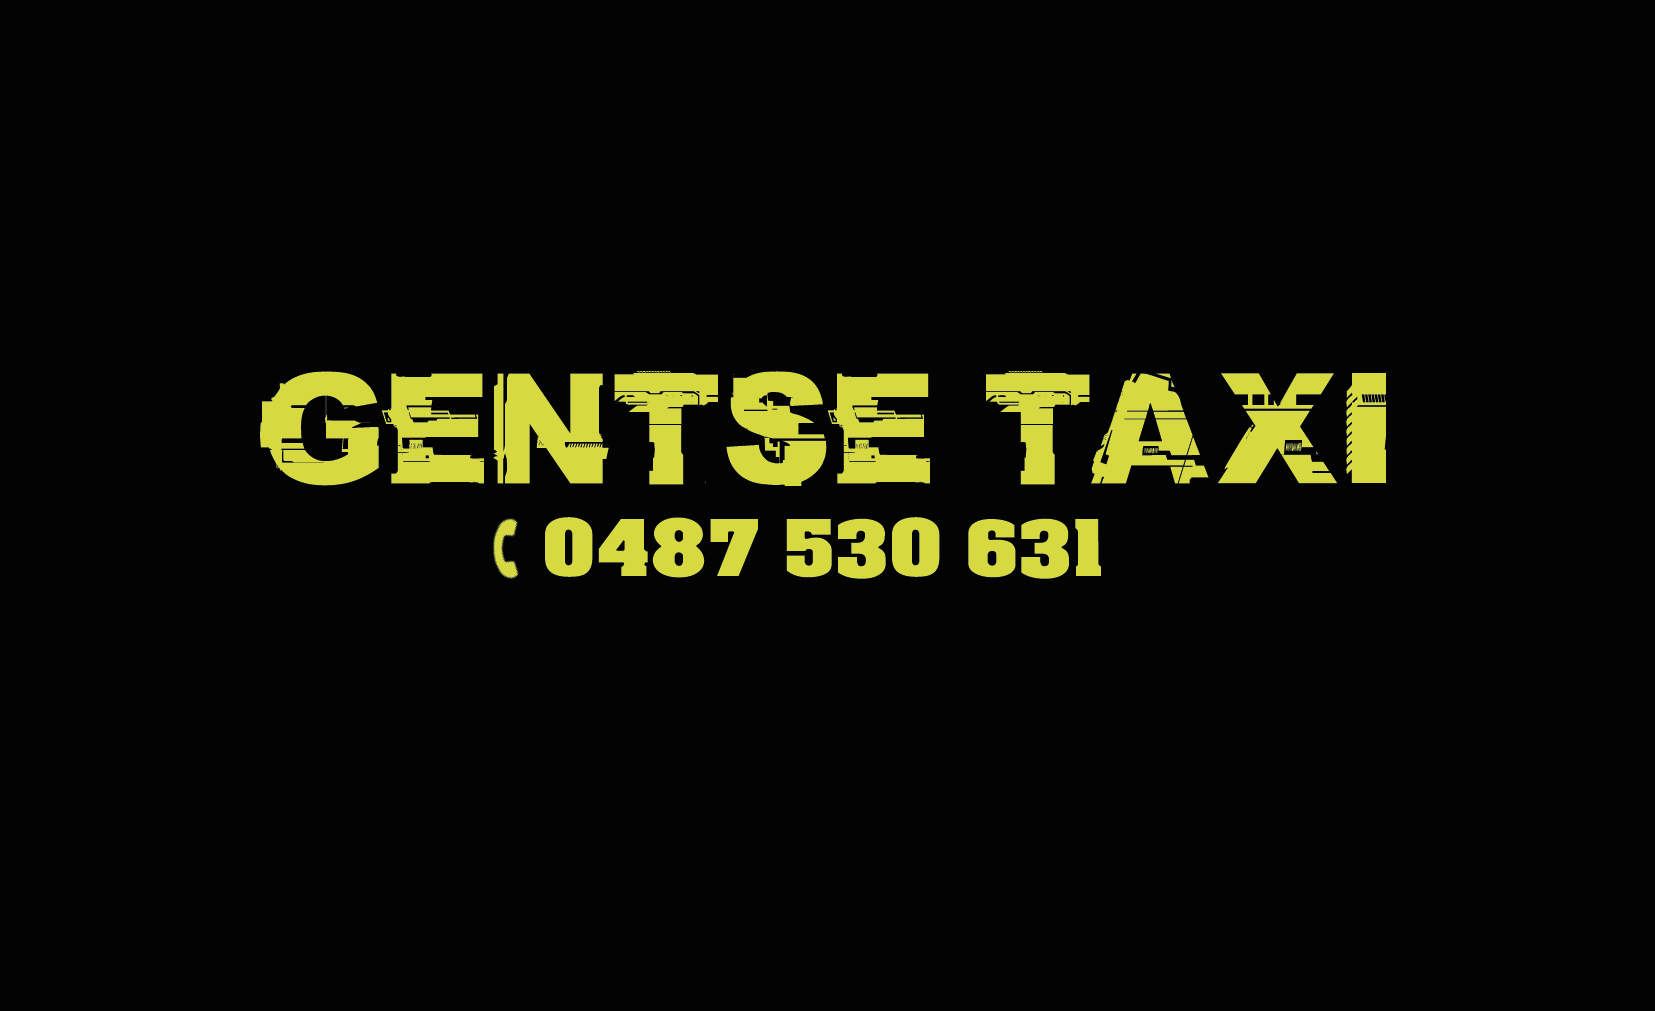 taxibedrijven met luchthavenvervoer Gavere Gentse Taxi